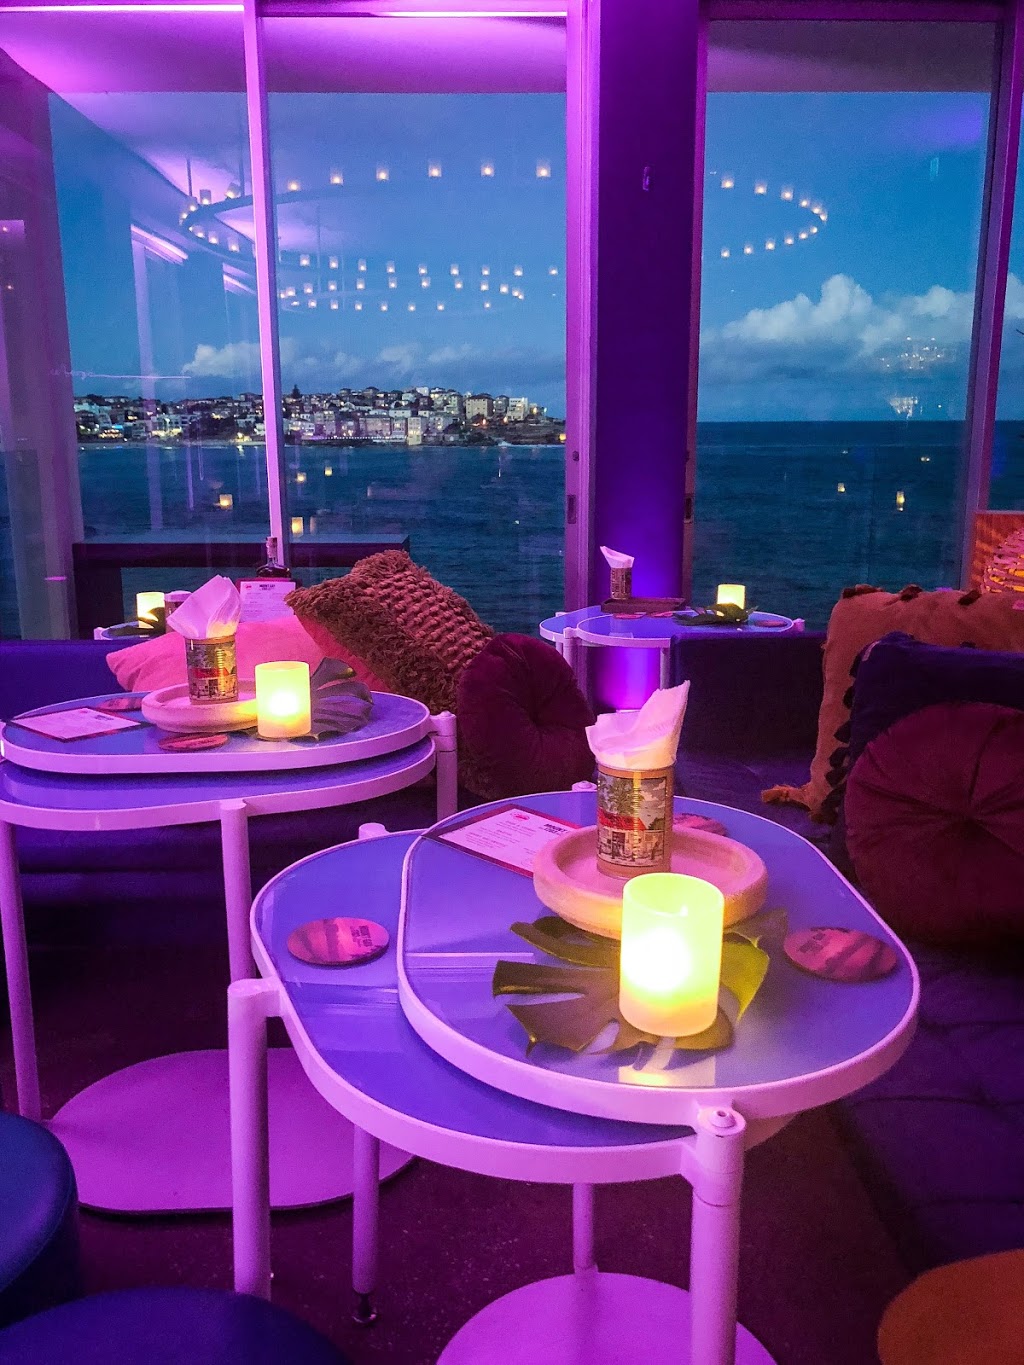 Icebergs Dining Room and Bar | restaurant | 1 Notts Ave, Bondi Beach NSW 2026, Australia | 0293659000 OR +61 2 9365 9000